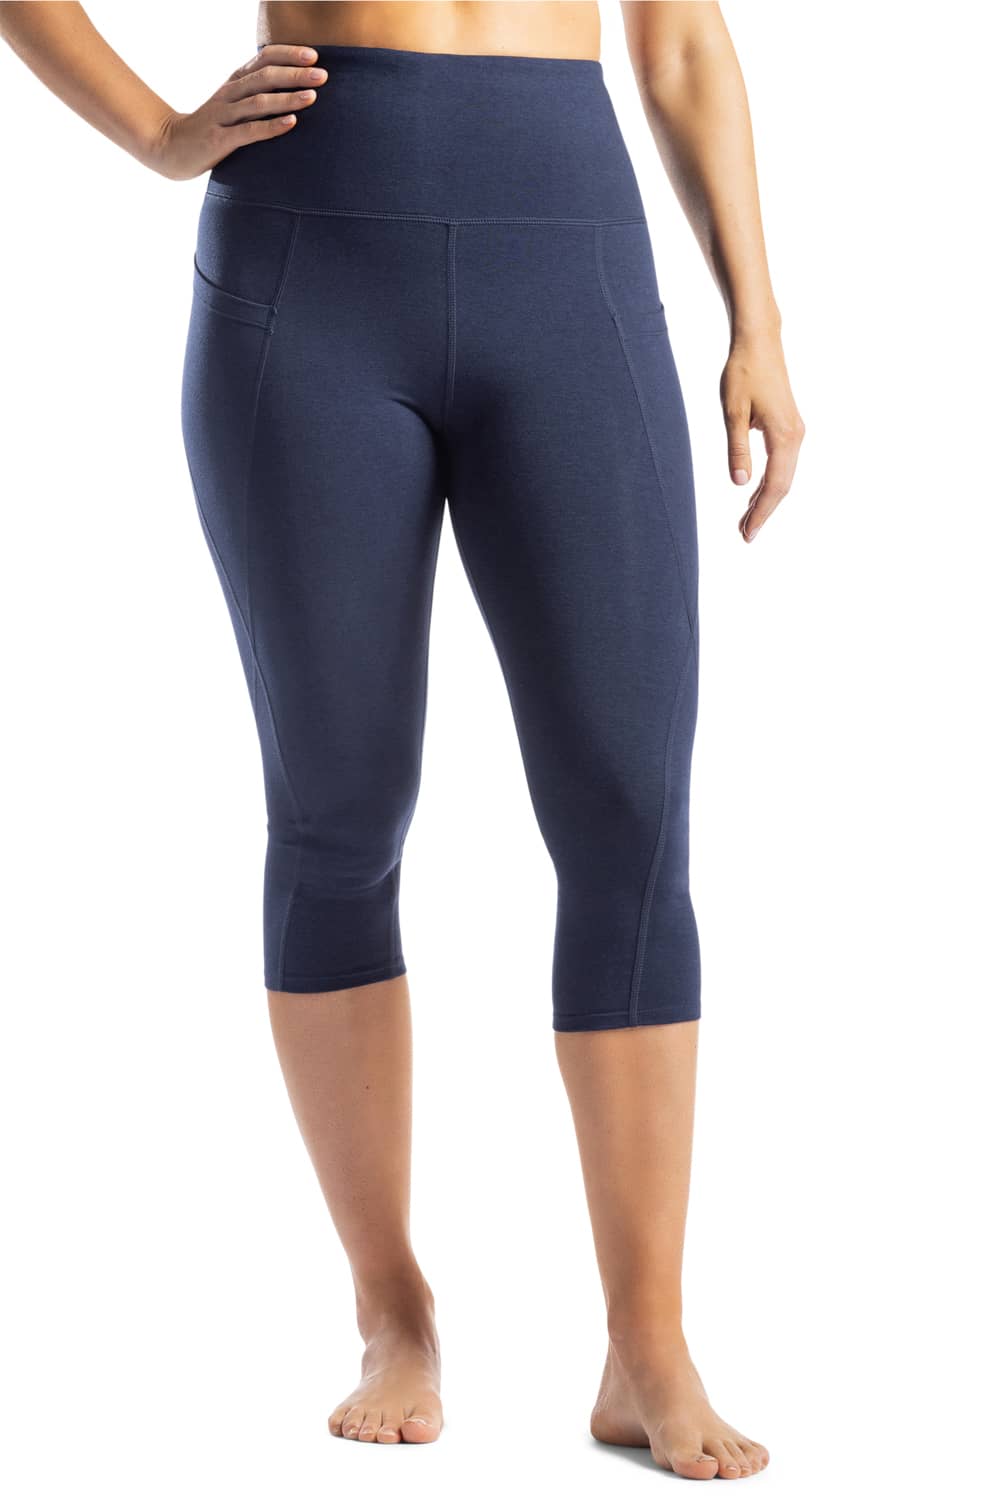 YYDGH High Waisted Yoga Pants for Women with Pockets Capri Leggings for  Women Workout Leggings for Women Yoga Capris Navy Blue XL